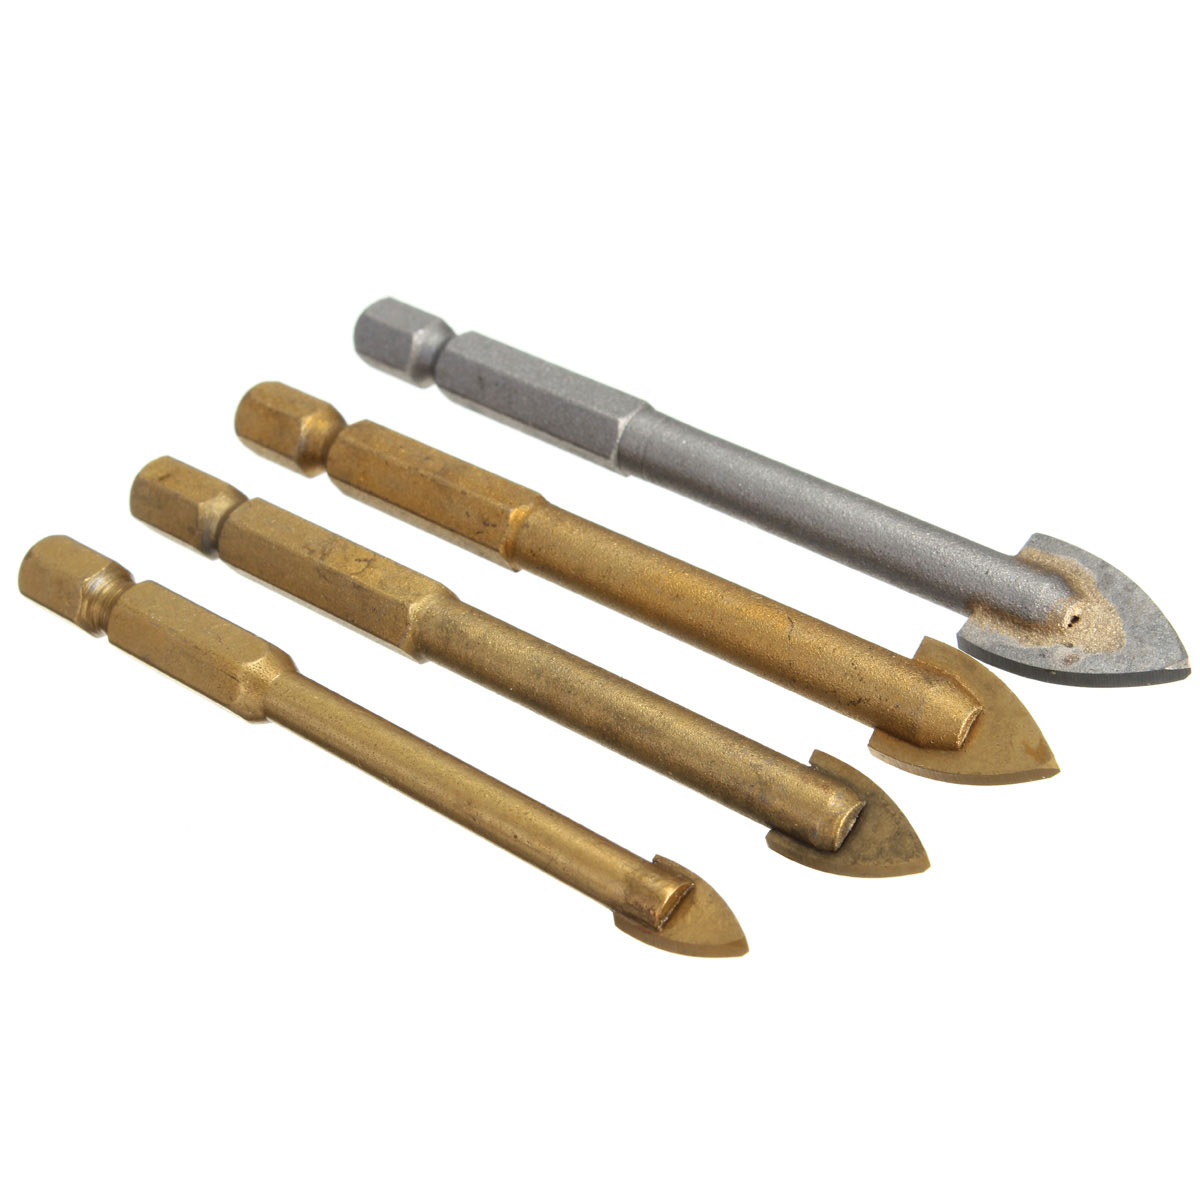 6-12mm-Carbide-Tile-Spear-Head-Drill-Bit-Glass-Drill-Hole-Tool-Tungsten-Carbide-Tipped-Bit-978952-3